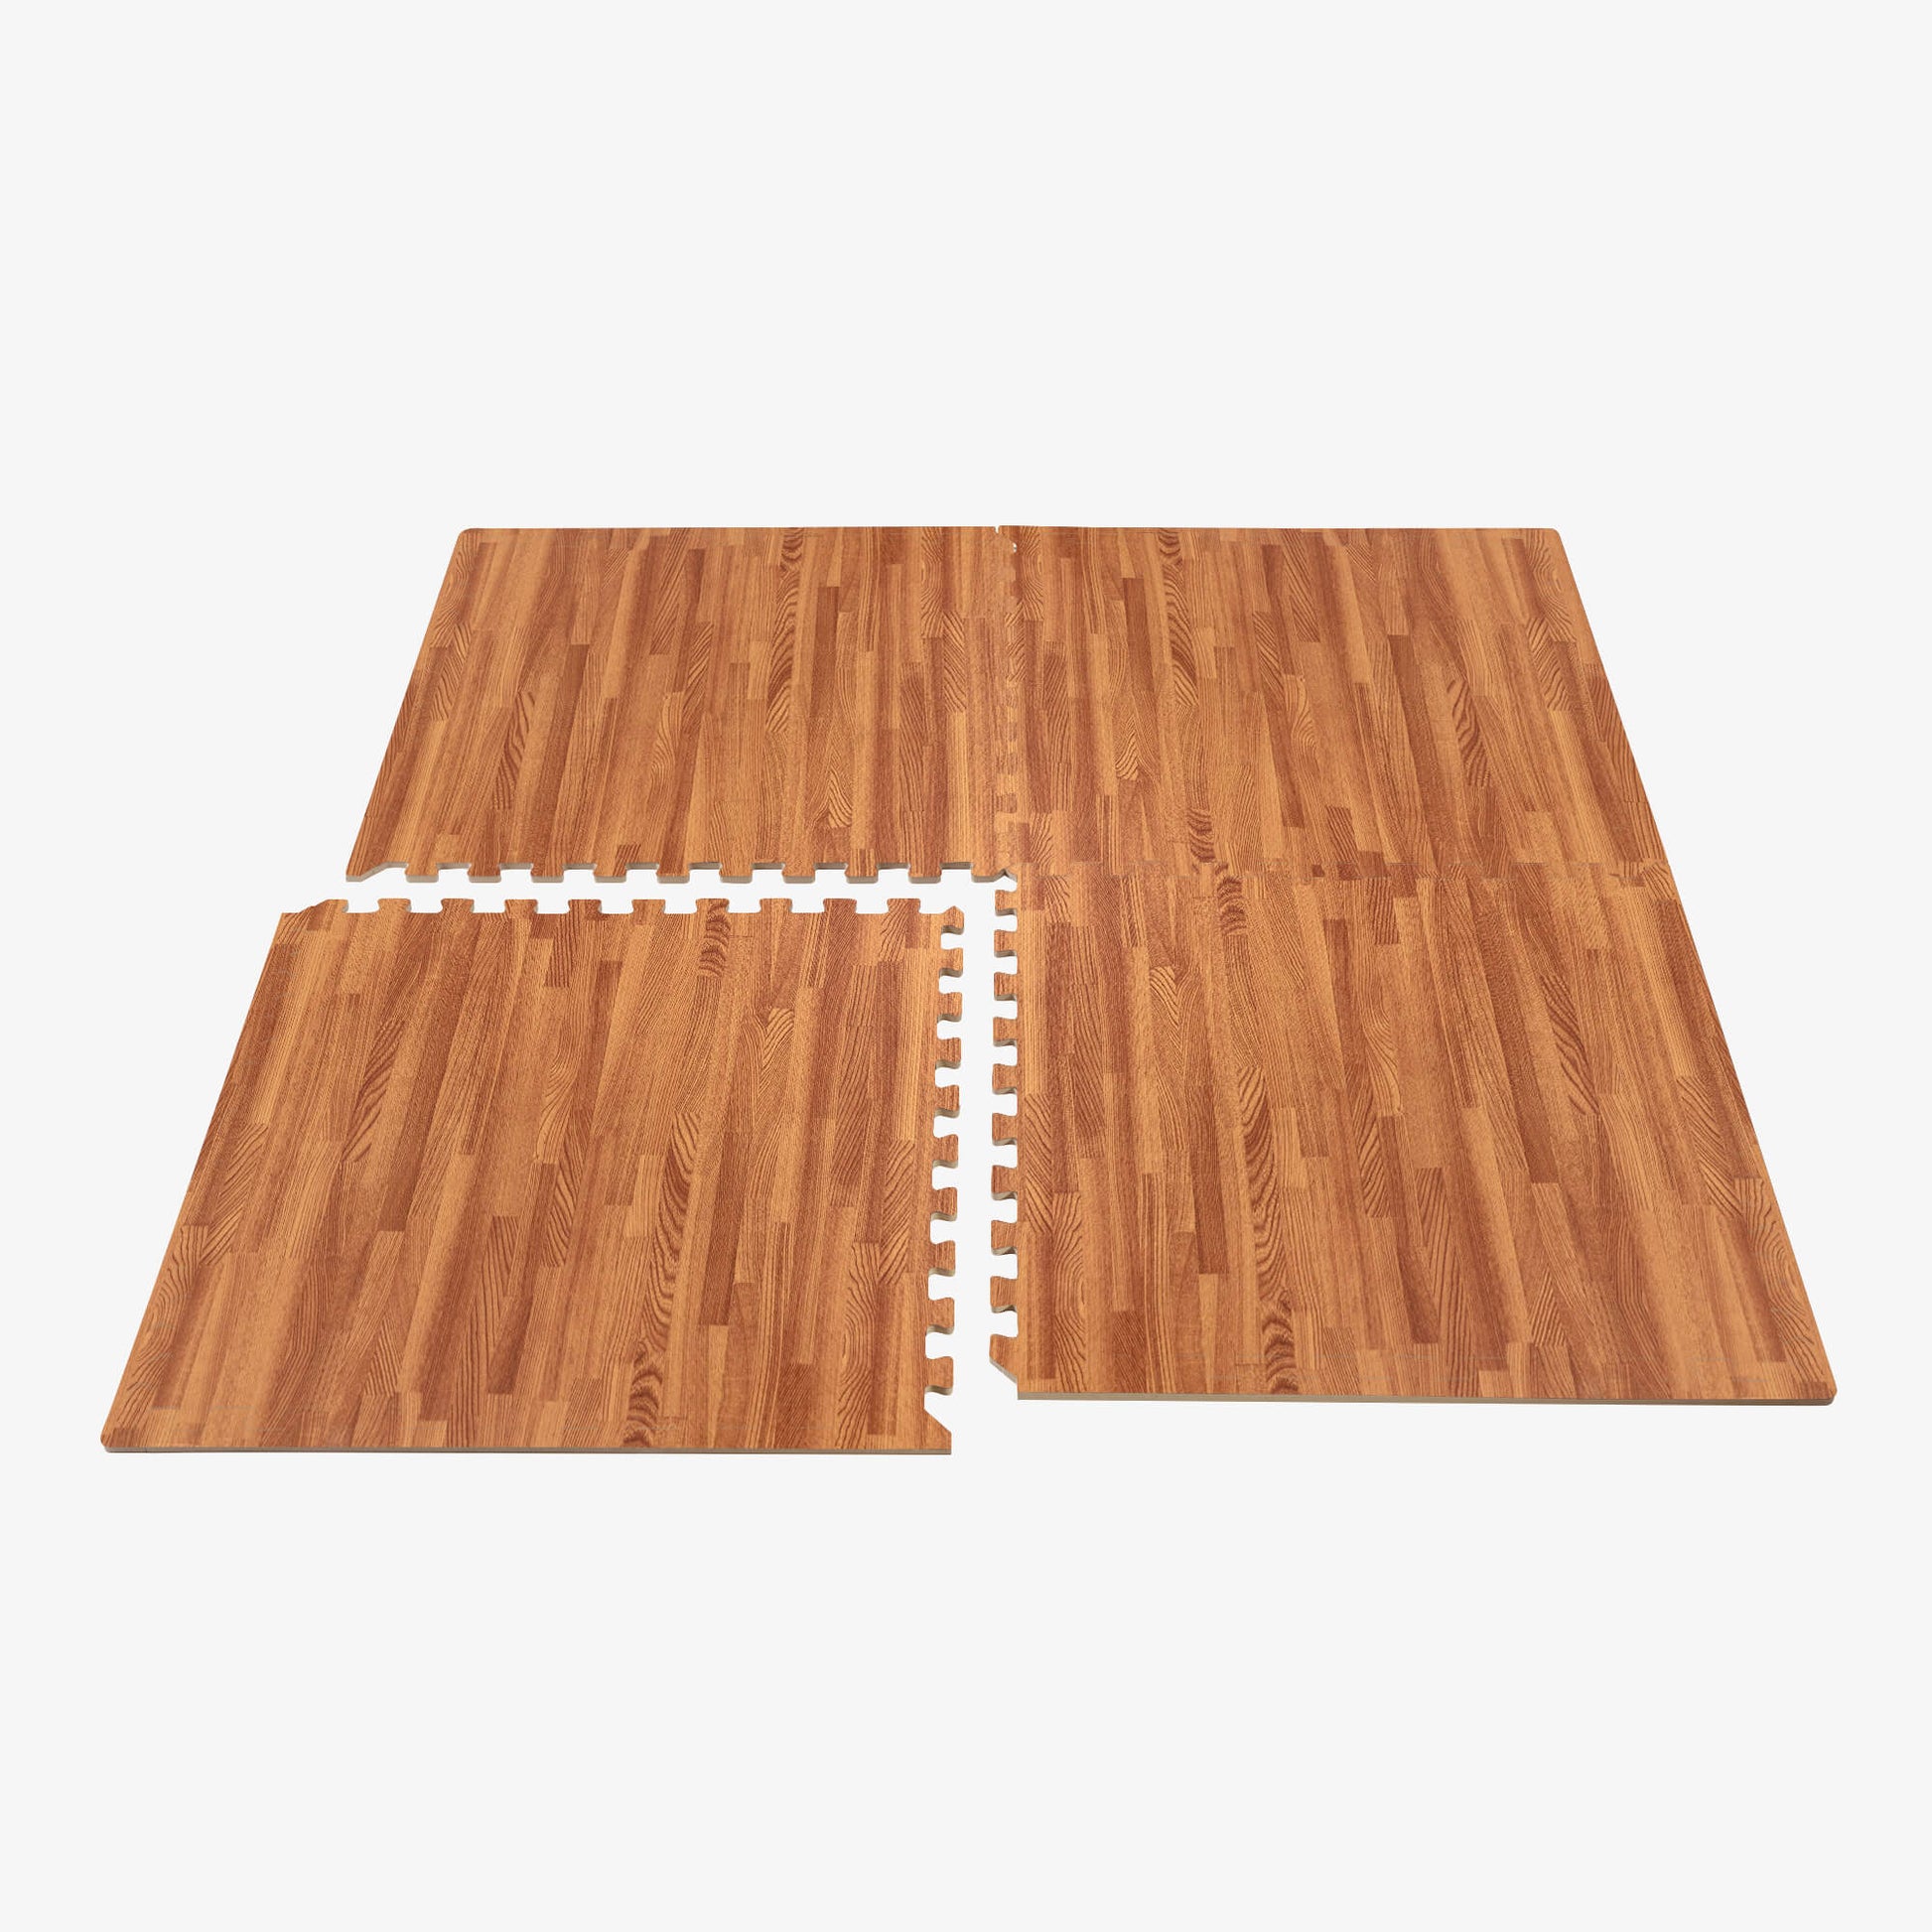 HOMCOM Wood Grain Floor Mats, Interlocking EVA Foam Mats Tiles